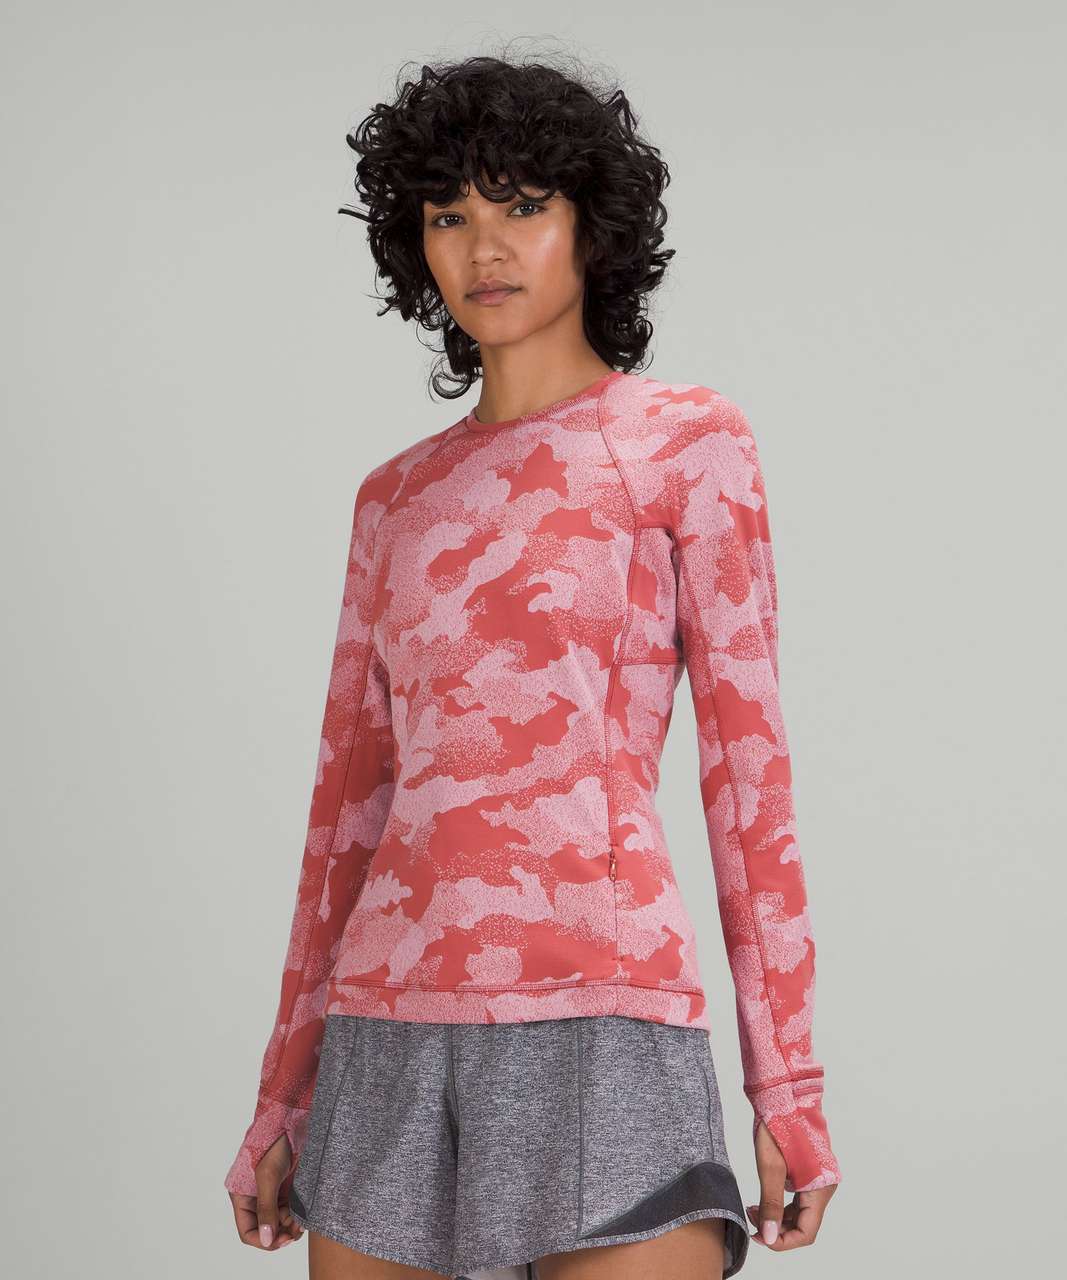 Lululemon Its Rulu Run Long Sleeve Shirt - Heritage Speckle Camo Jacquard Soft Cranberry Pink Taupe